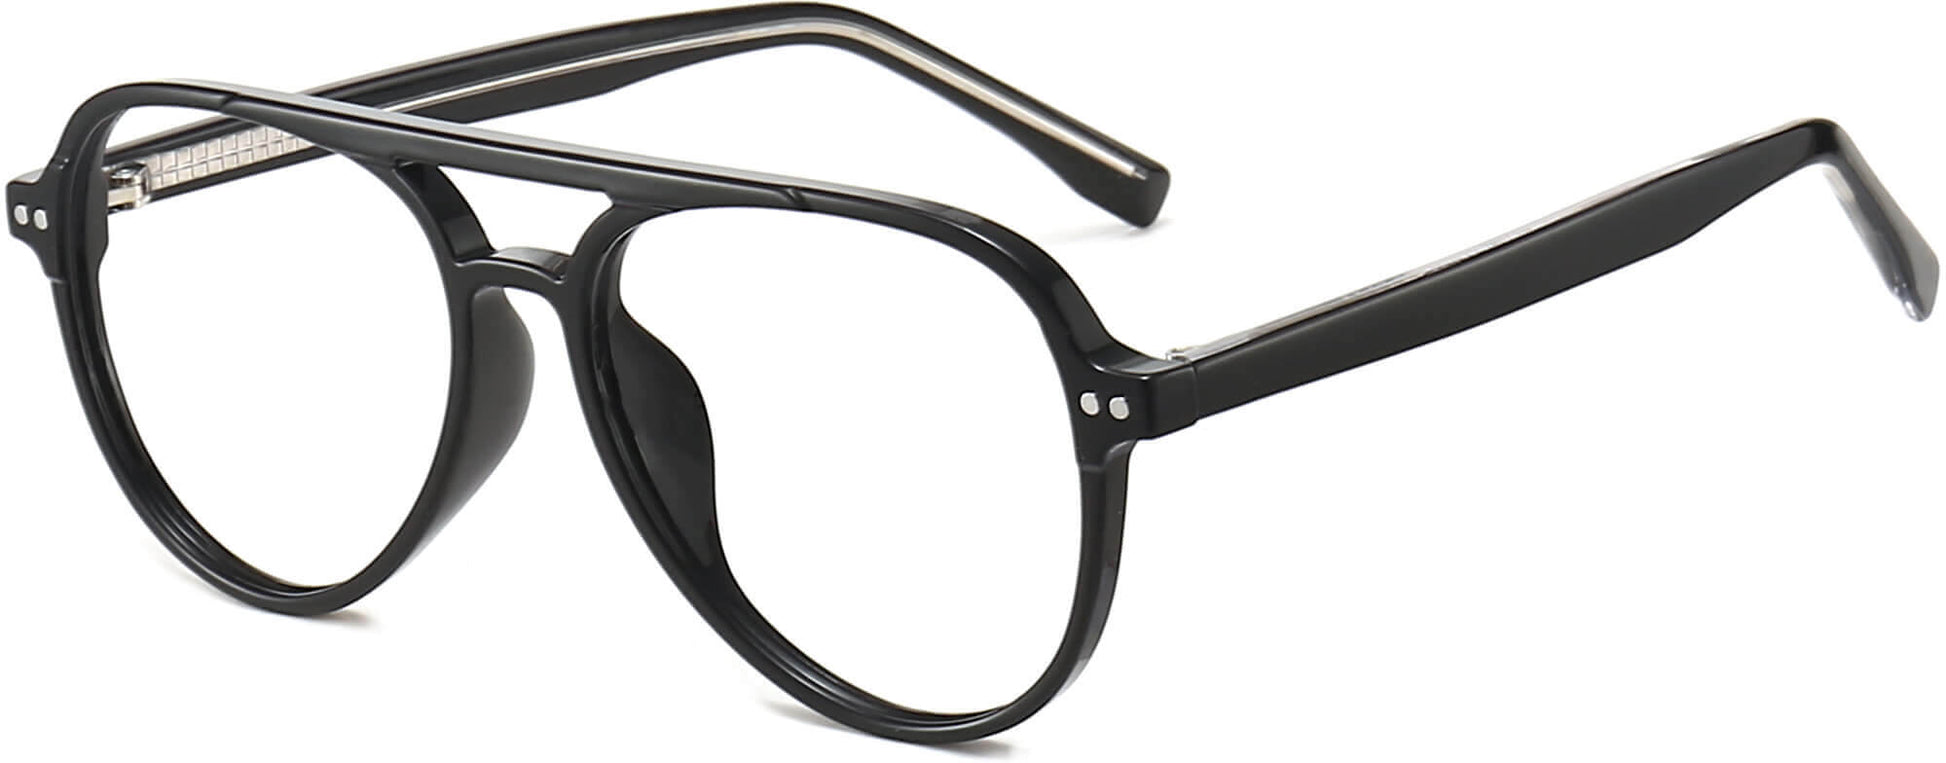 Zane Aviator Black Eyeglasses from ANRRI, angle view